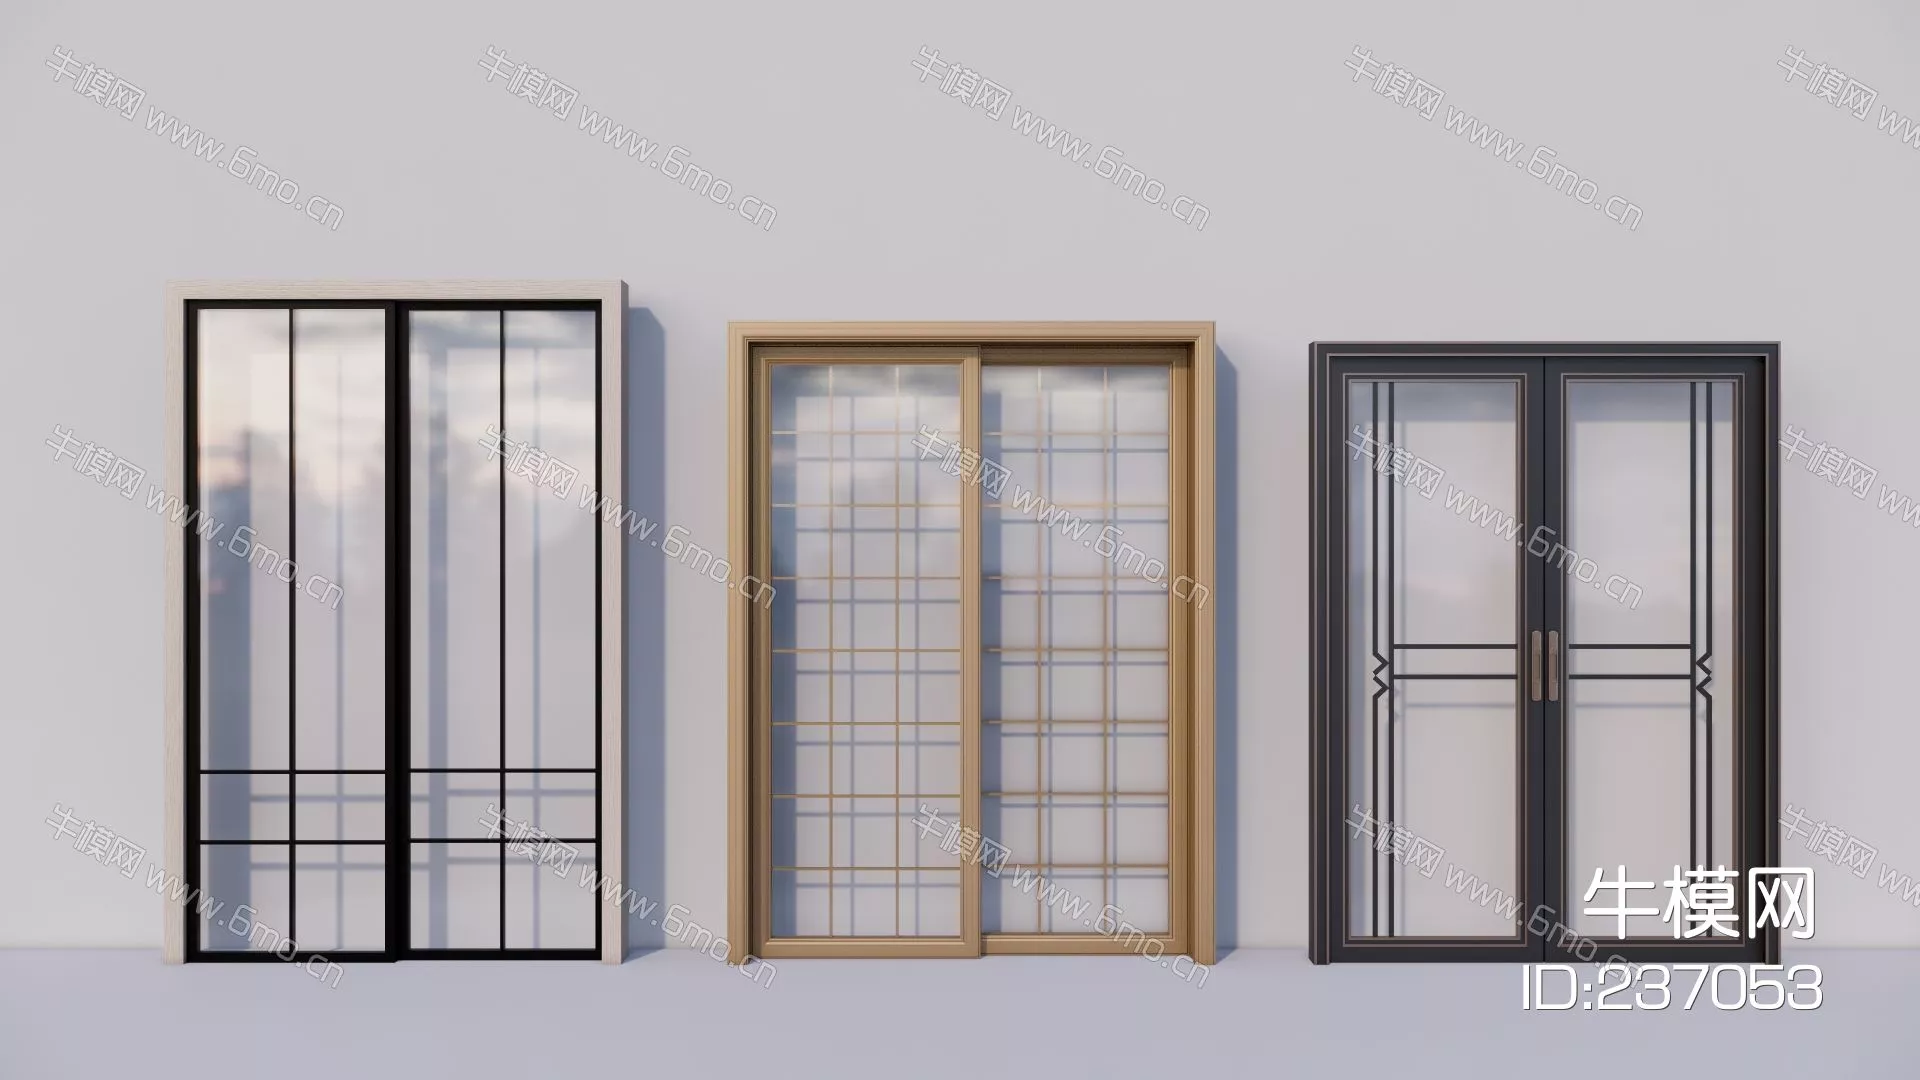 MODERN DOOR AND WINDOWS - SKETCHUP 3D MODEL - ENSCAPE - 237053